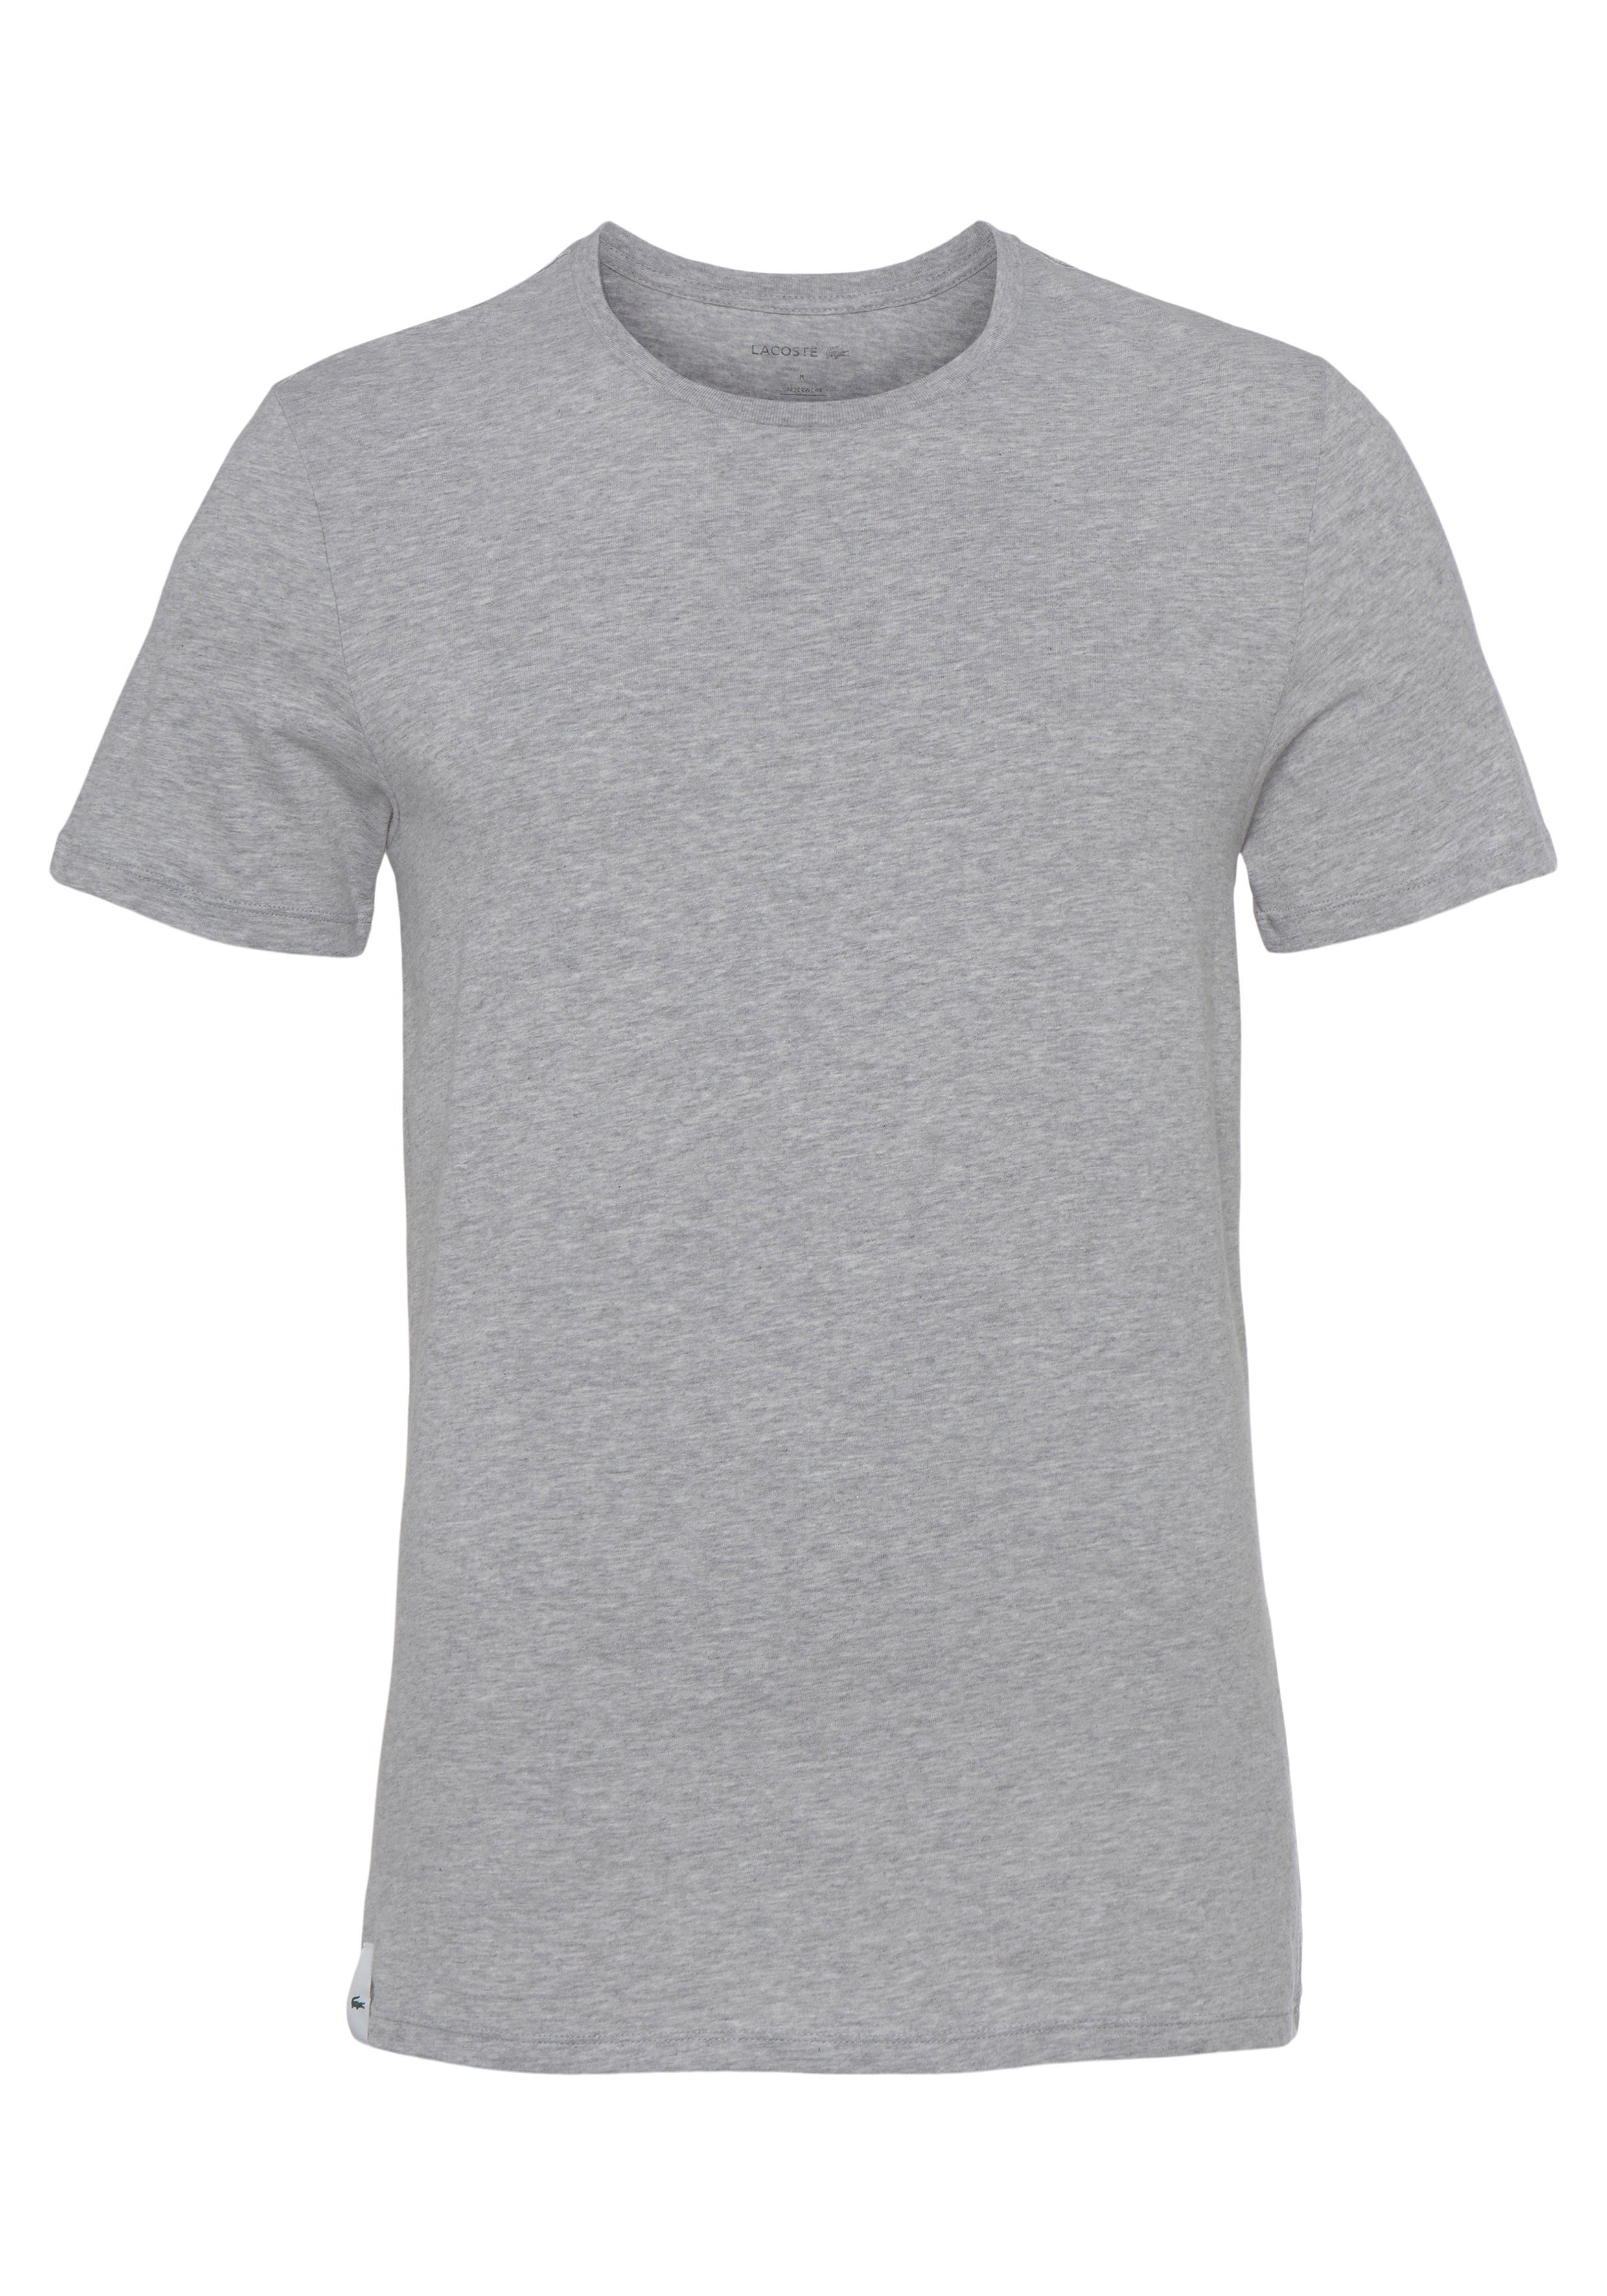 grau Lacoste für Baumwollmaterial weiß T-Shirt Atmungsaktives angenehmes Hautgefühl (3er-Pack) schwarz